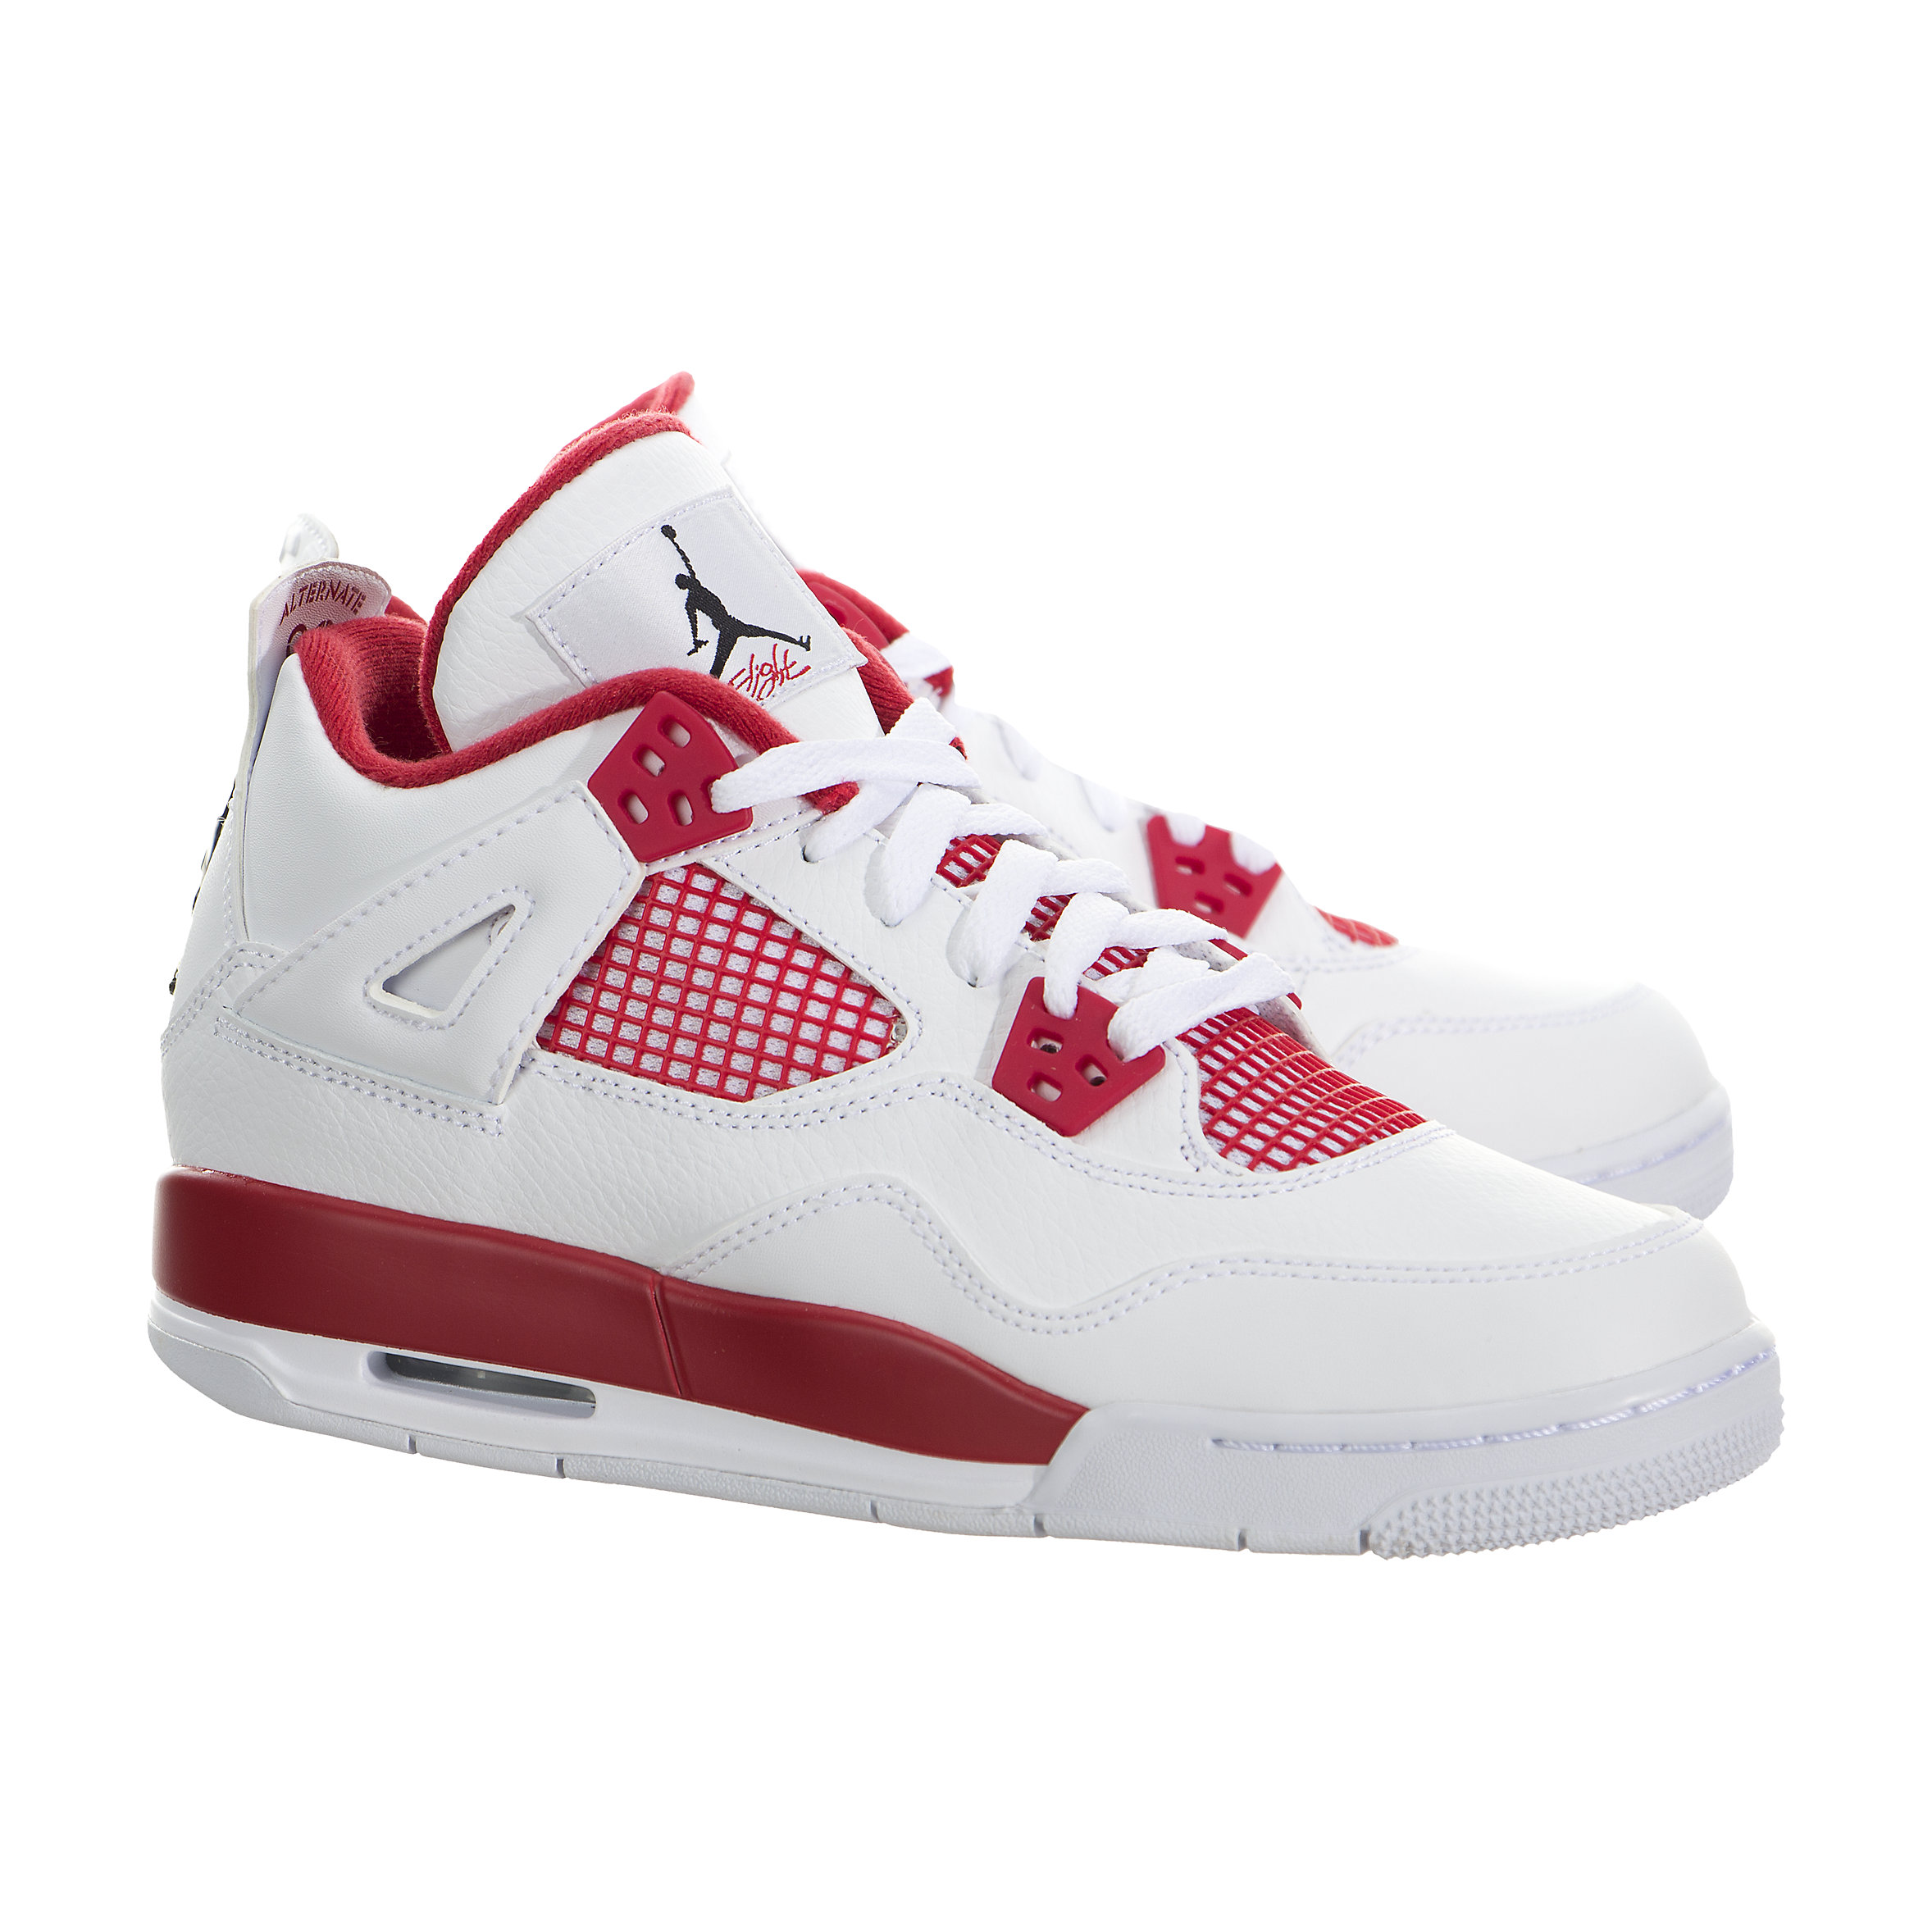 Air Jordan IV (4) Retro (Kids) - $139.99 | Sneakerhead.com - 408452-106